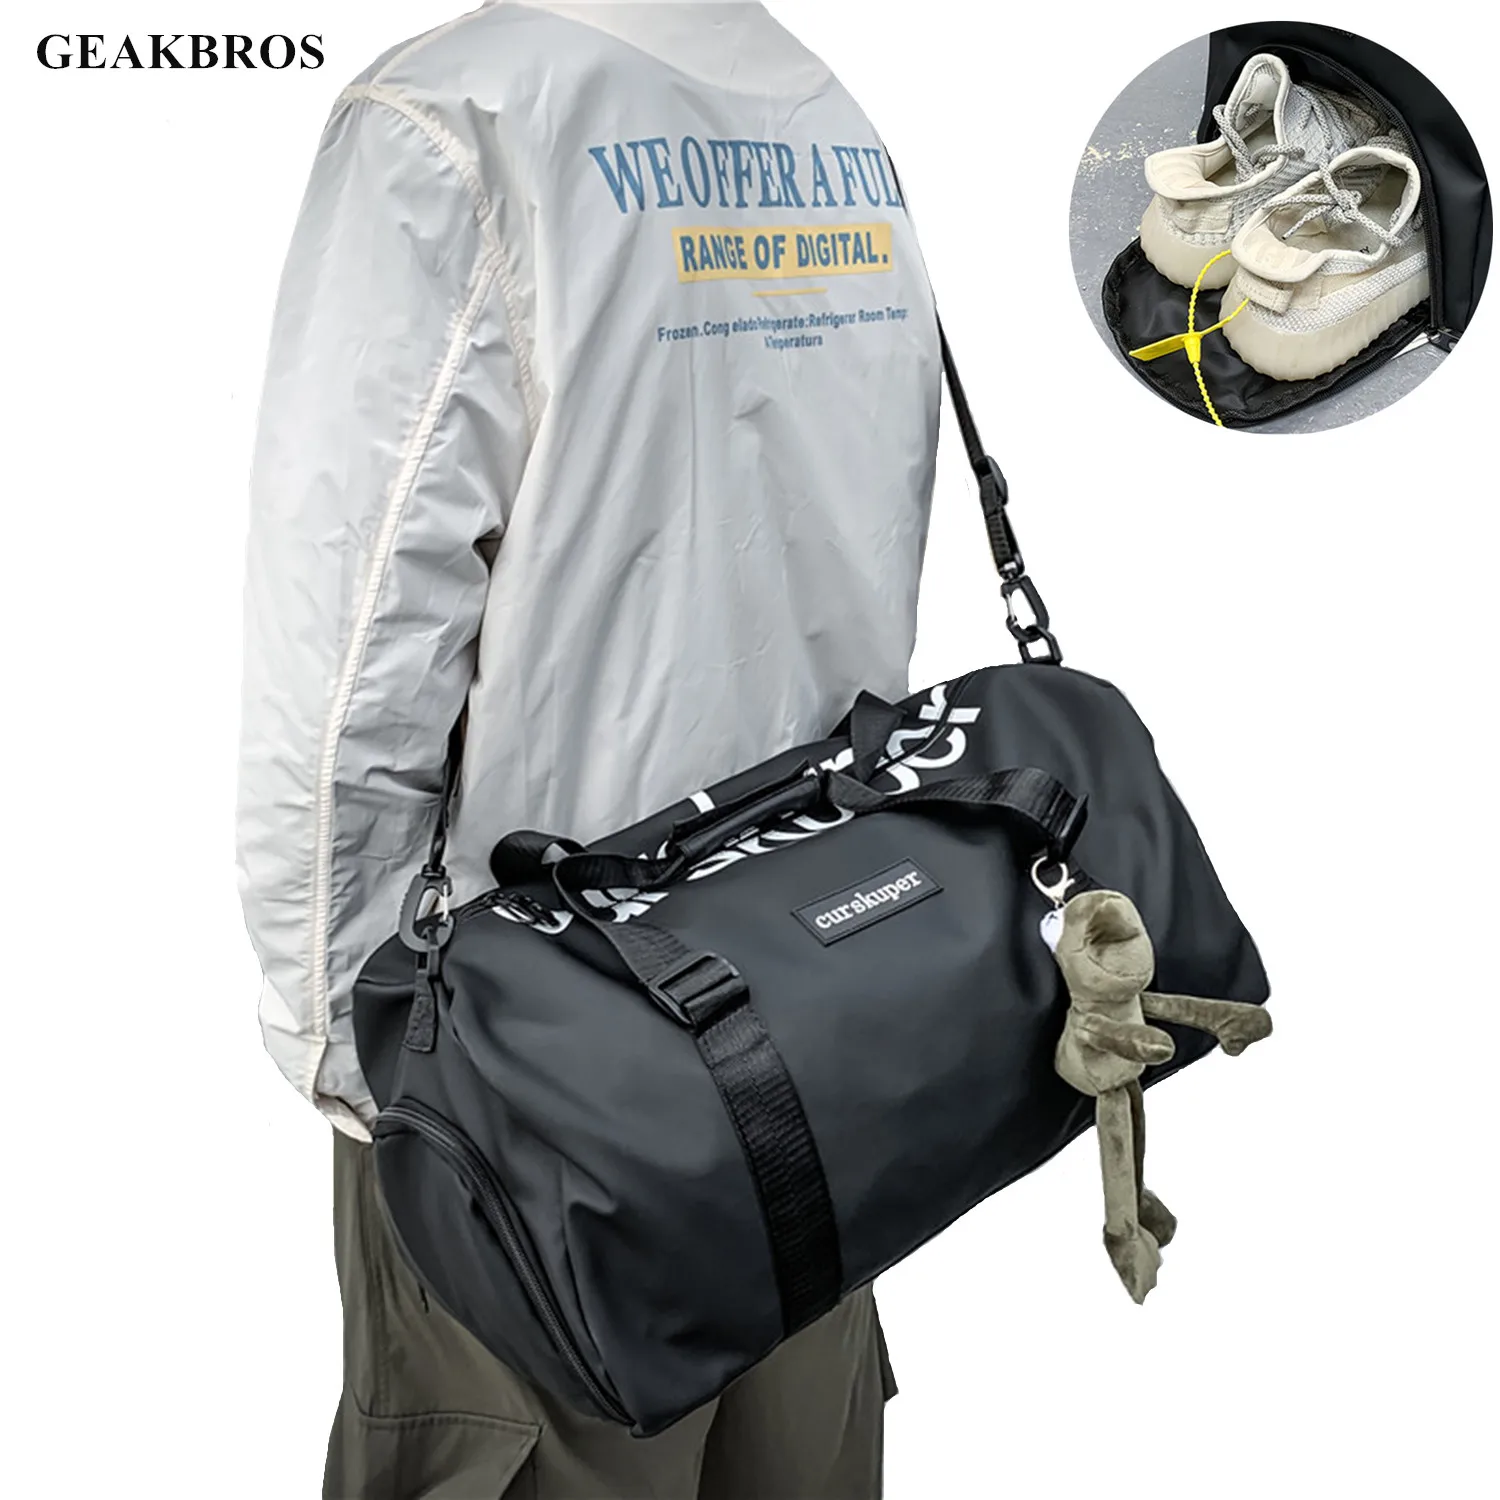 Aphmau Drawstring Backpack Sport Gym Bag For Yoga Swimming Gymsack Sport  Strap Pack Bag 